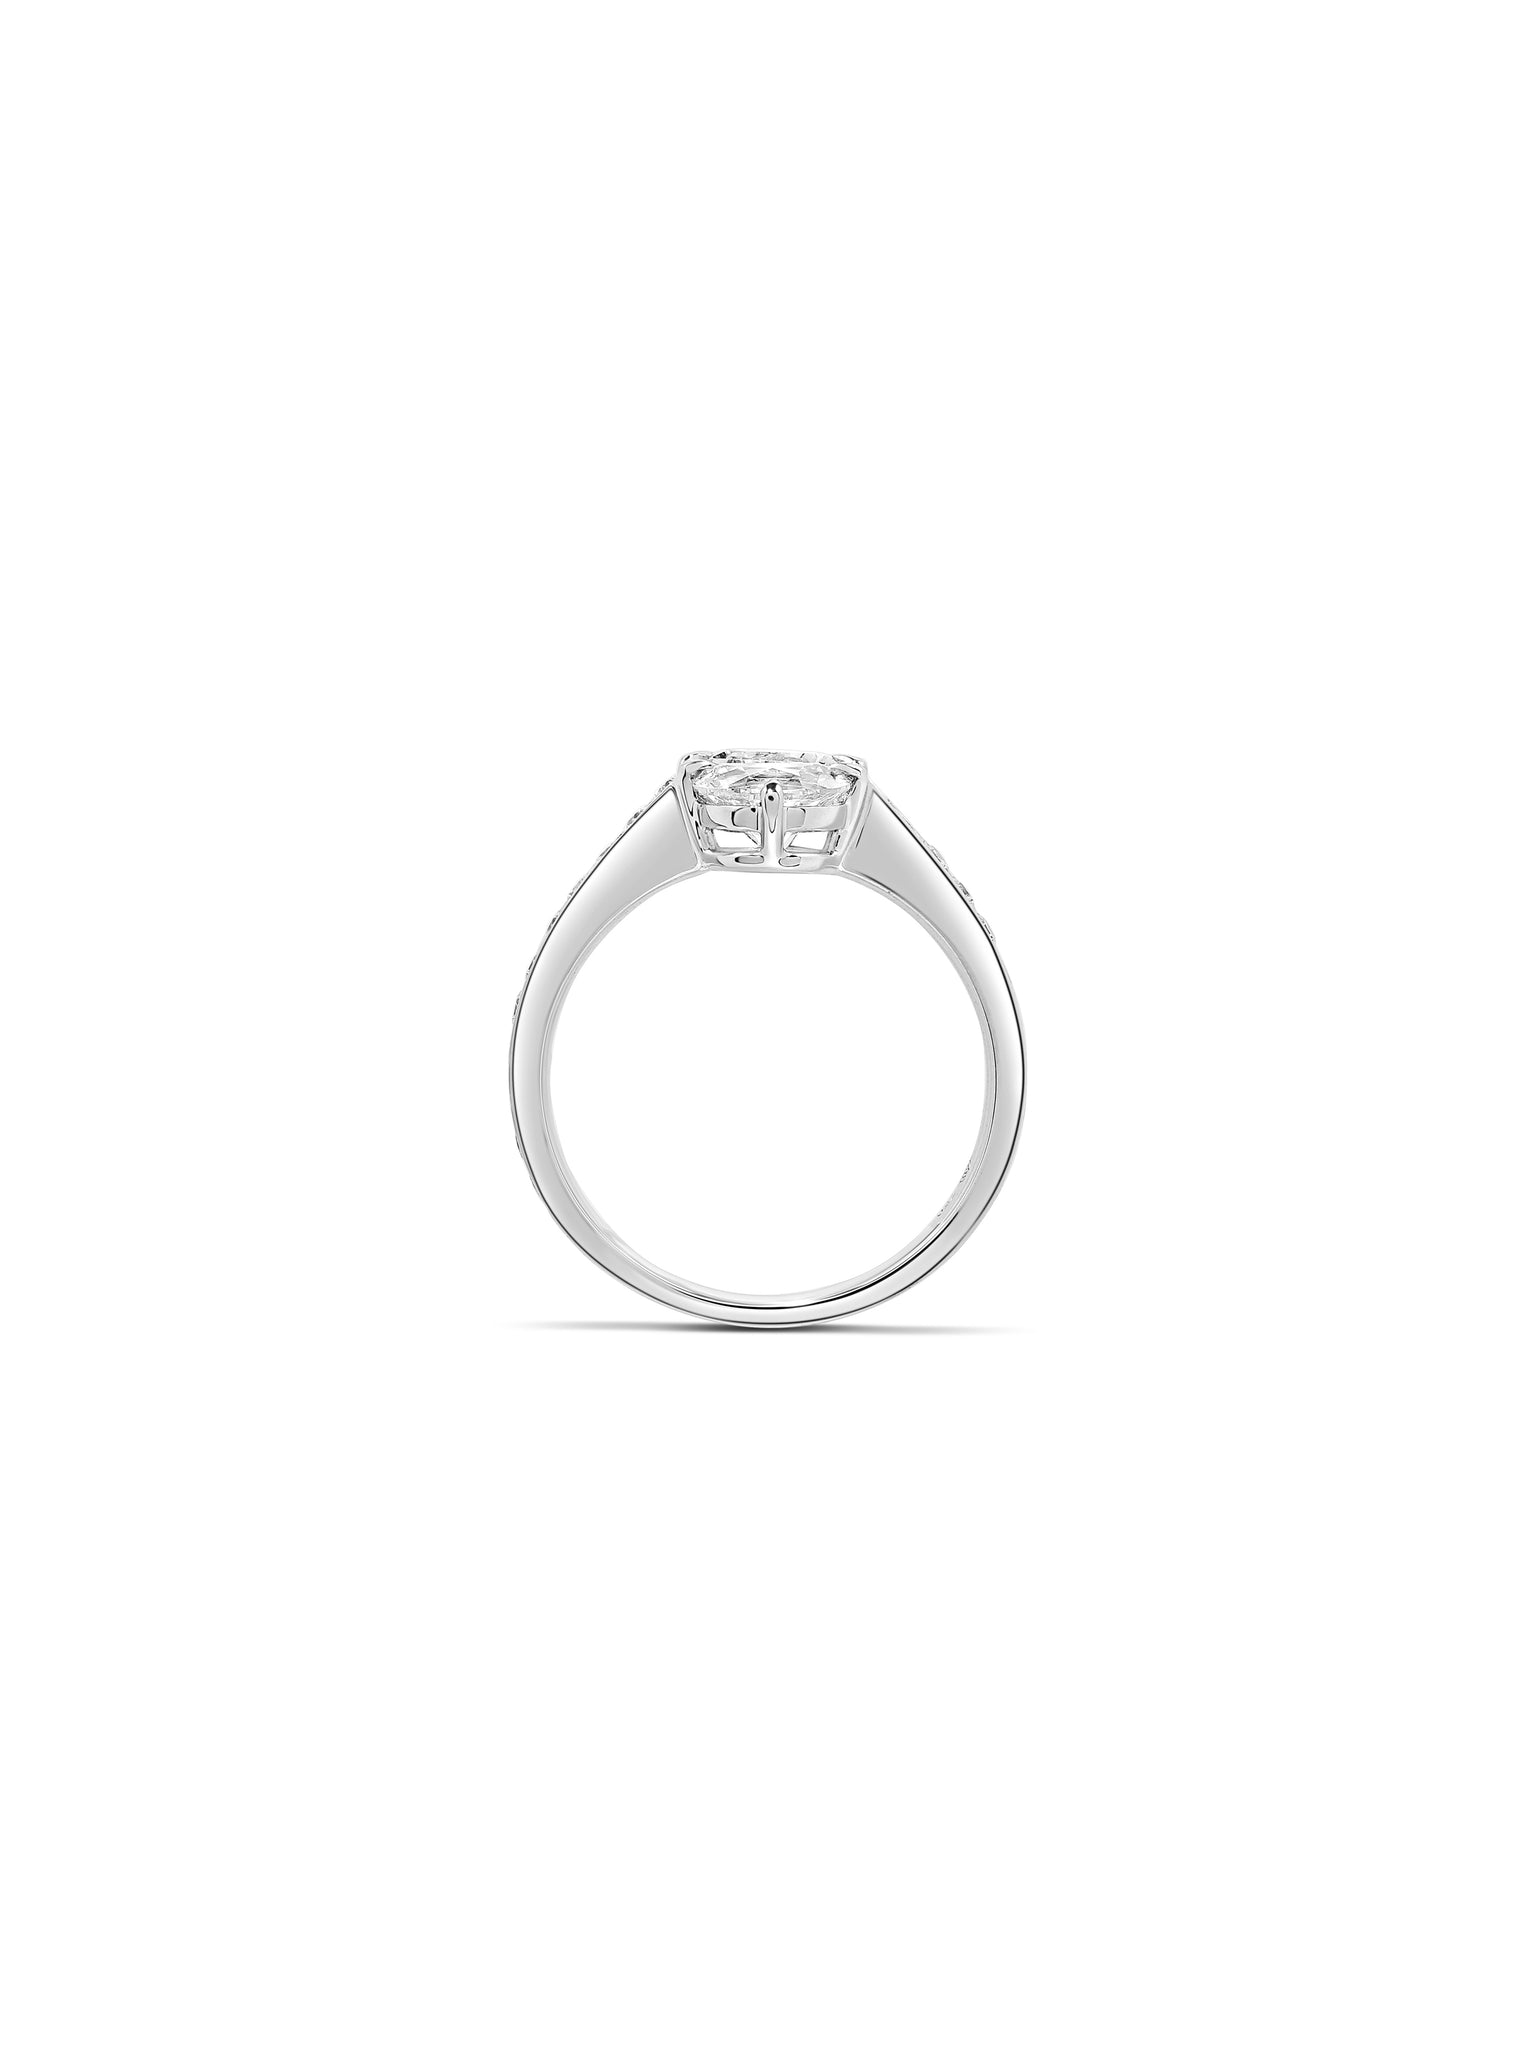 Equinox Half-moon Diamond Ring